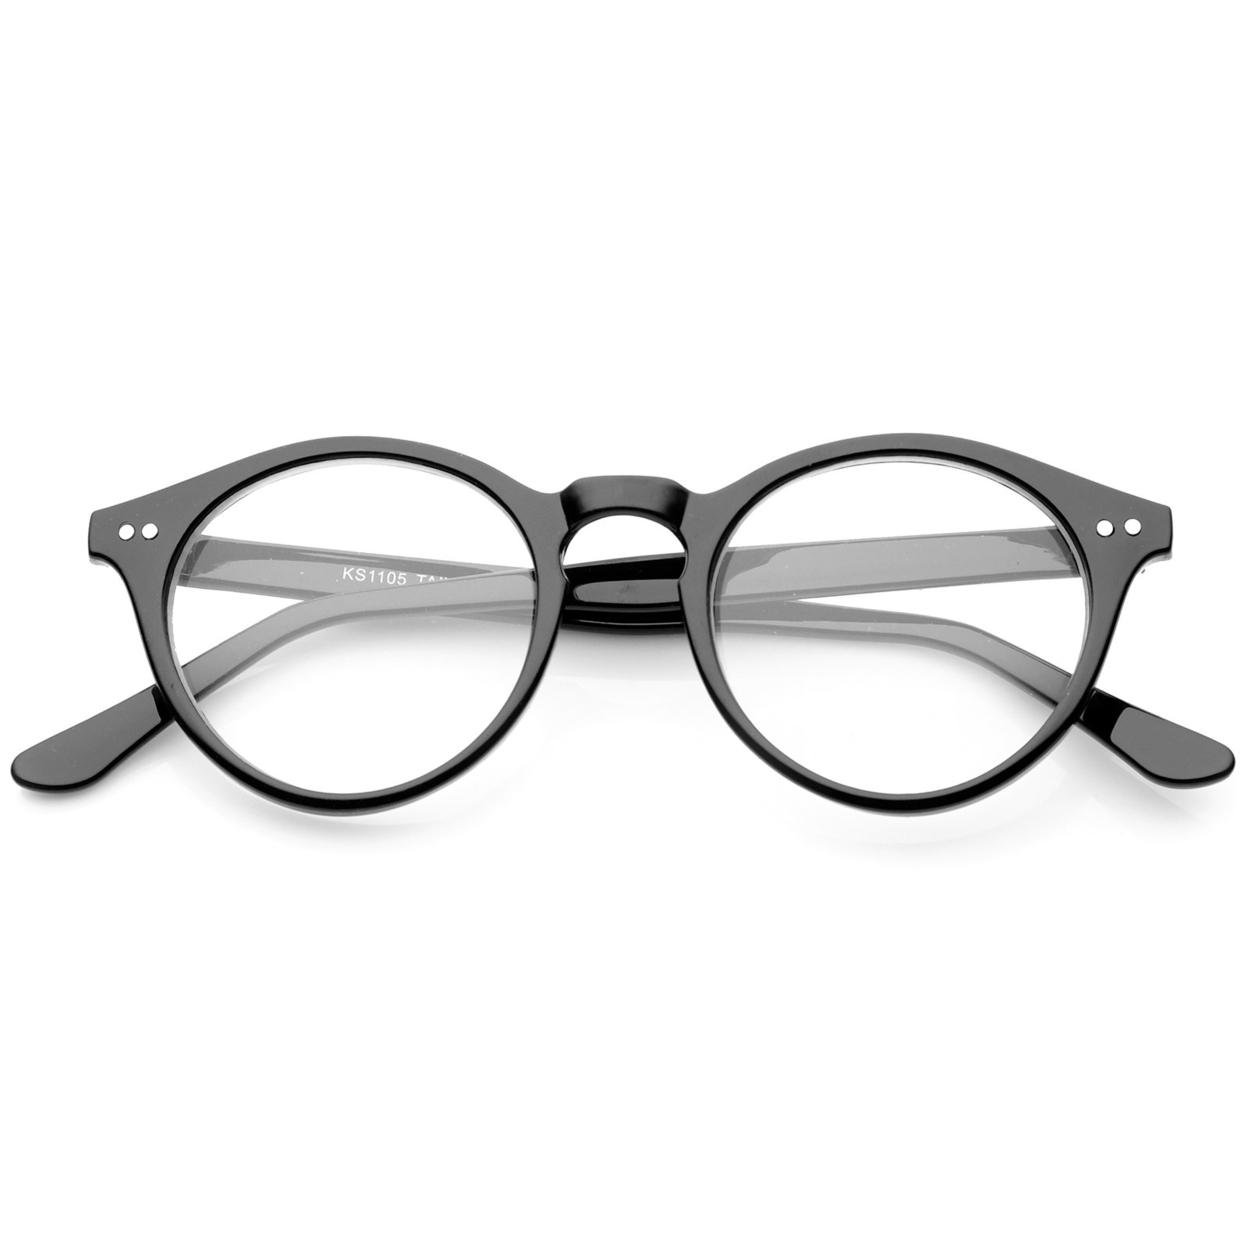 Retro Keyhole Nose Bridge Clear Lens P3 Round Glasses 46mm - Black / Clear